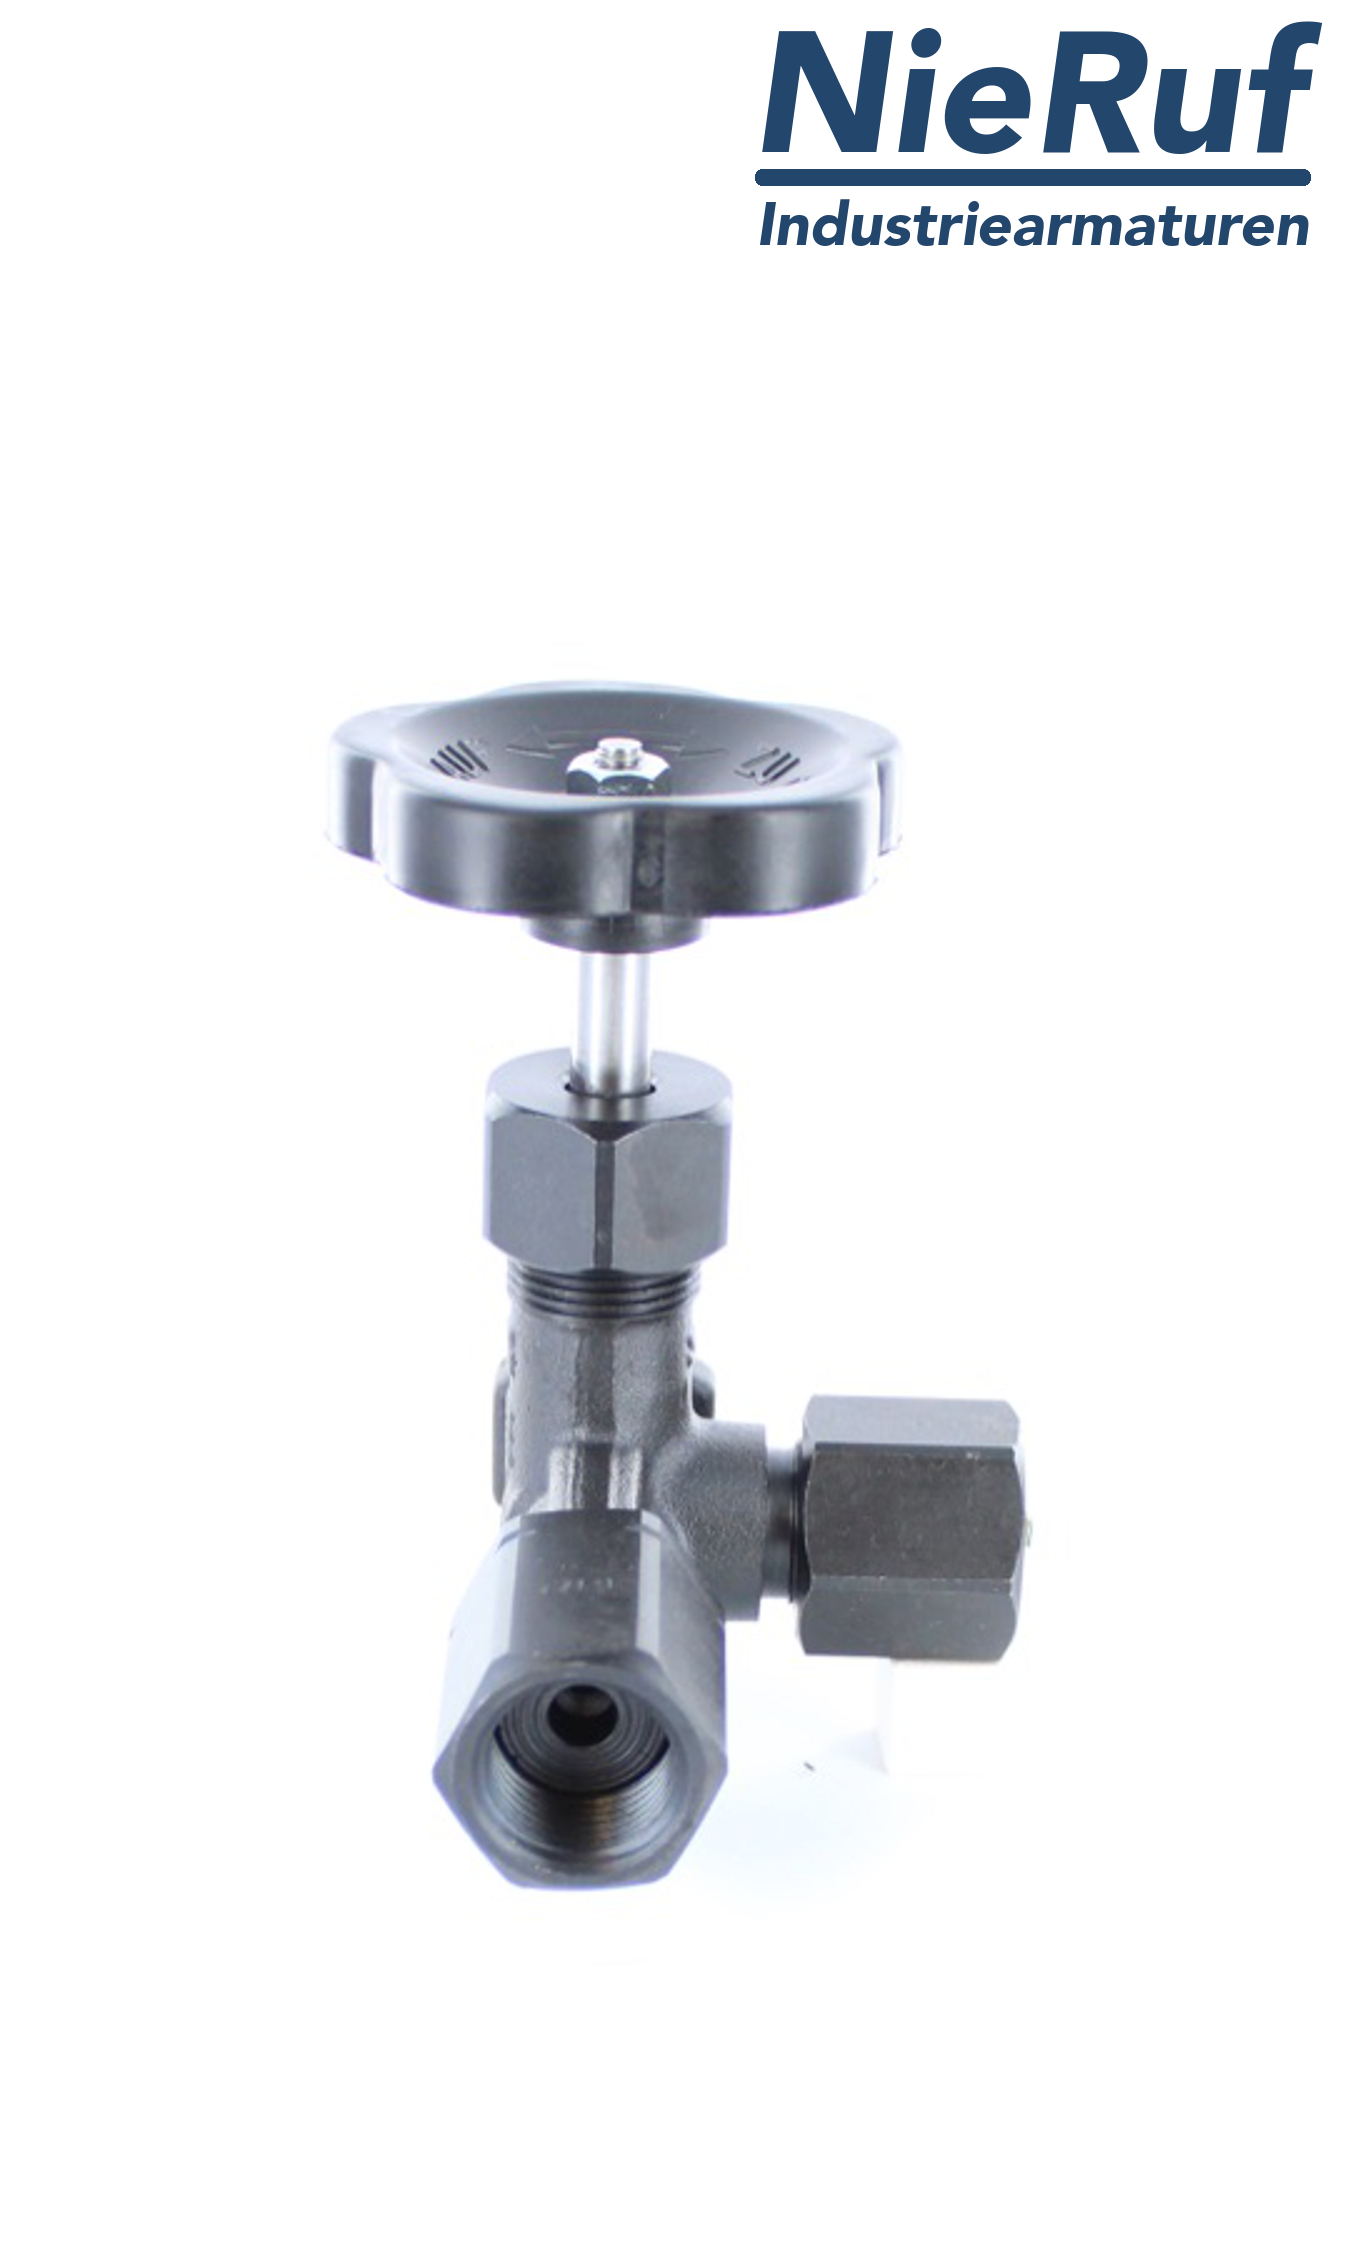 manometer gauge valves male thread x adapter for instrument holder with nut adjustable x test connector M20x1,5 DIN 16271 steel 1.0460 400 bar